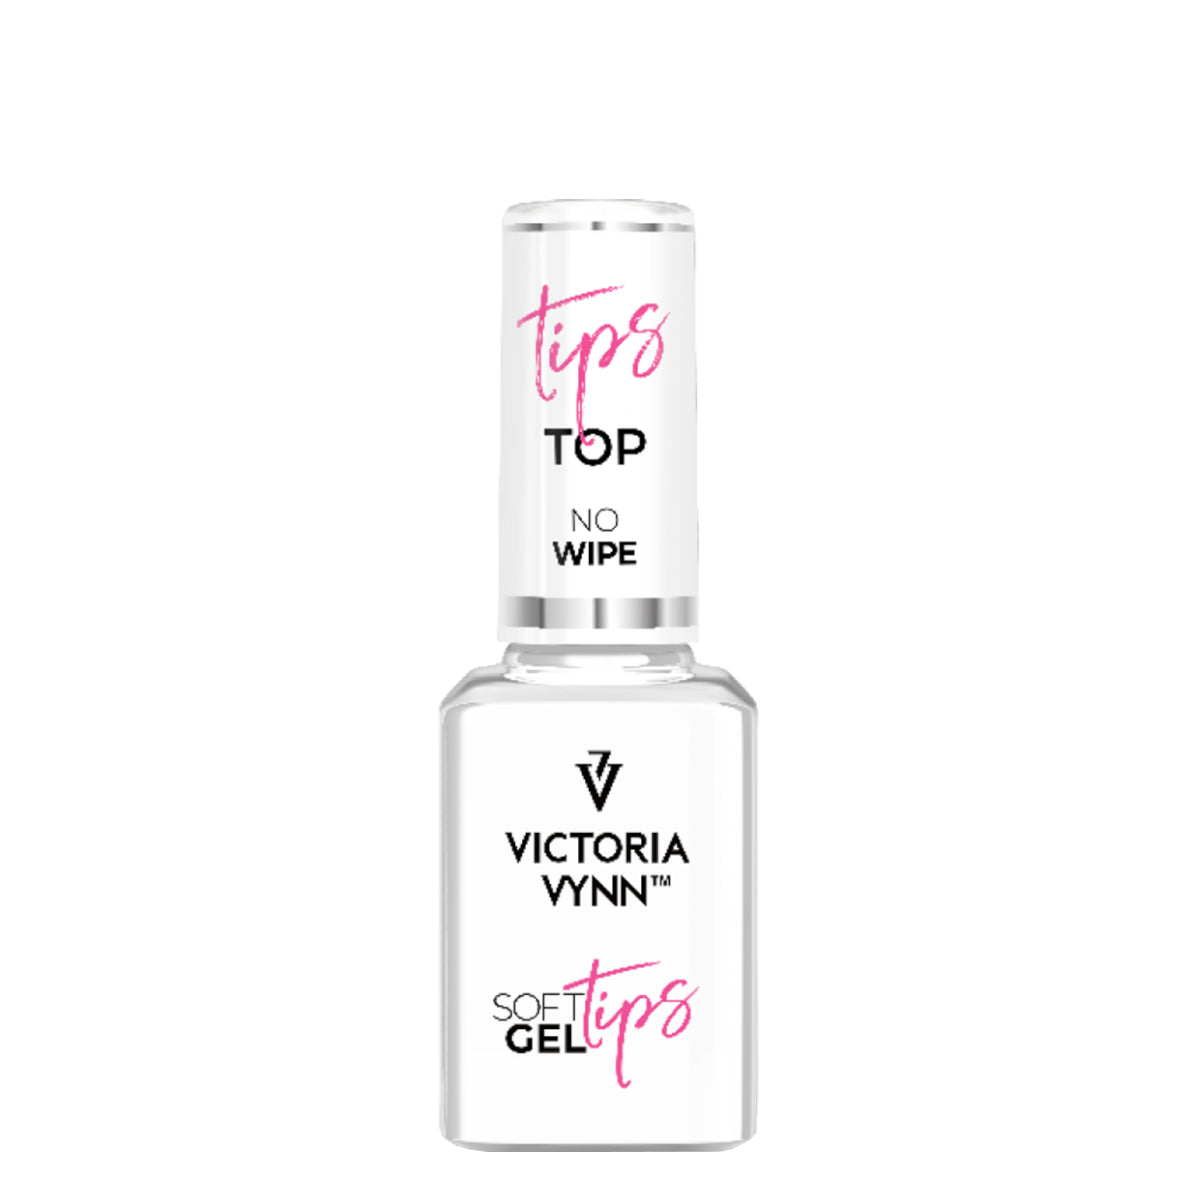 Victoria Vynn Soft Gel Tips Preparations Set Top No Wipe - Roxie Cosmetics